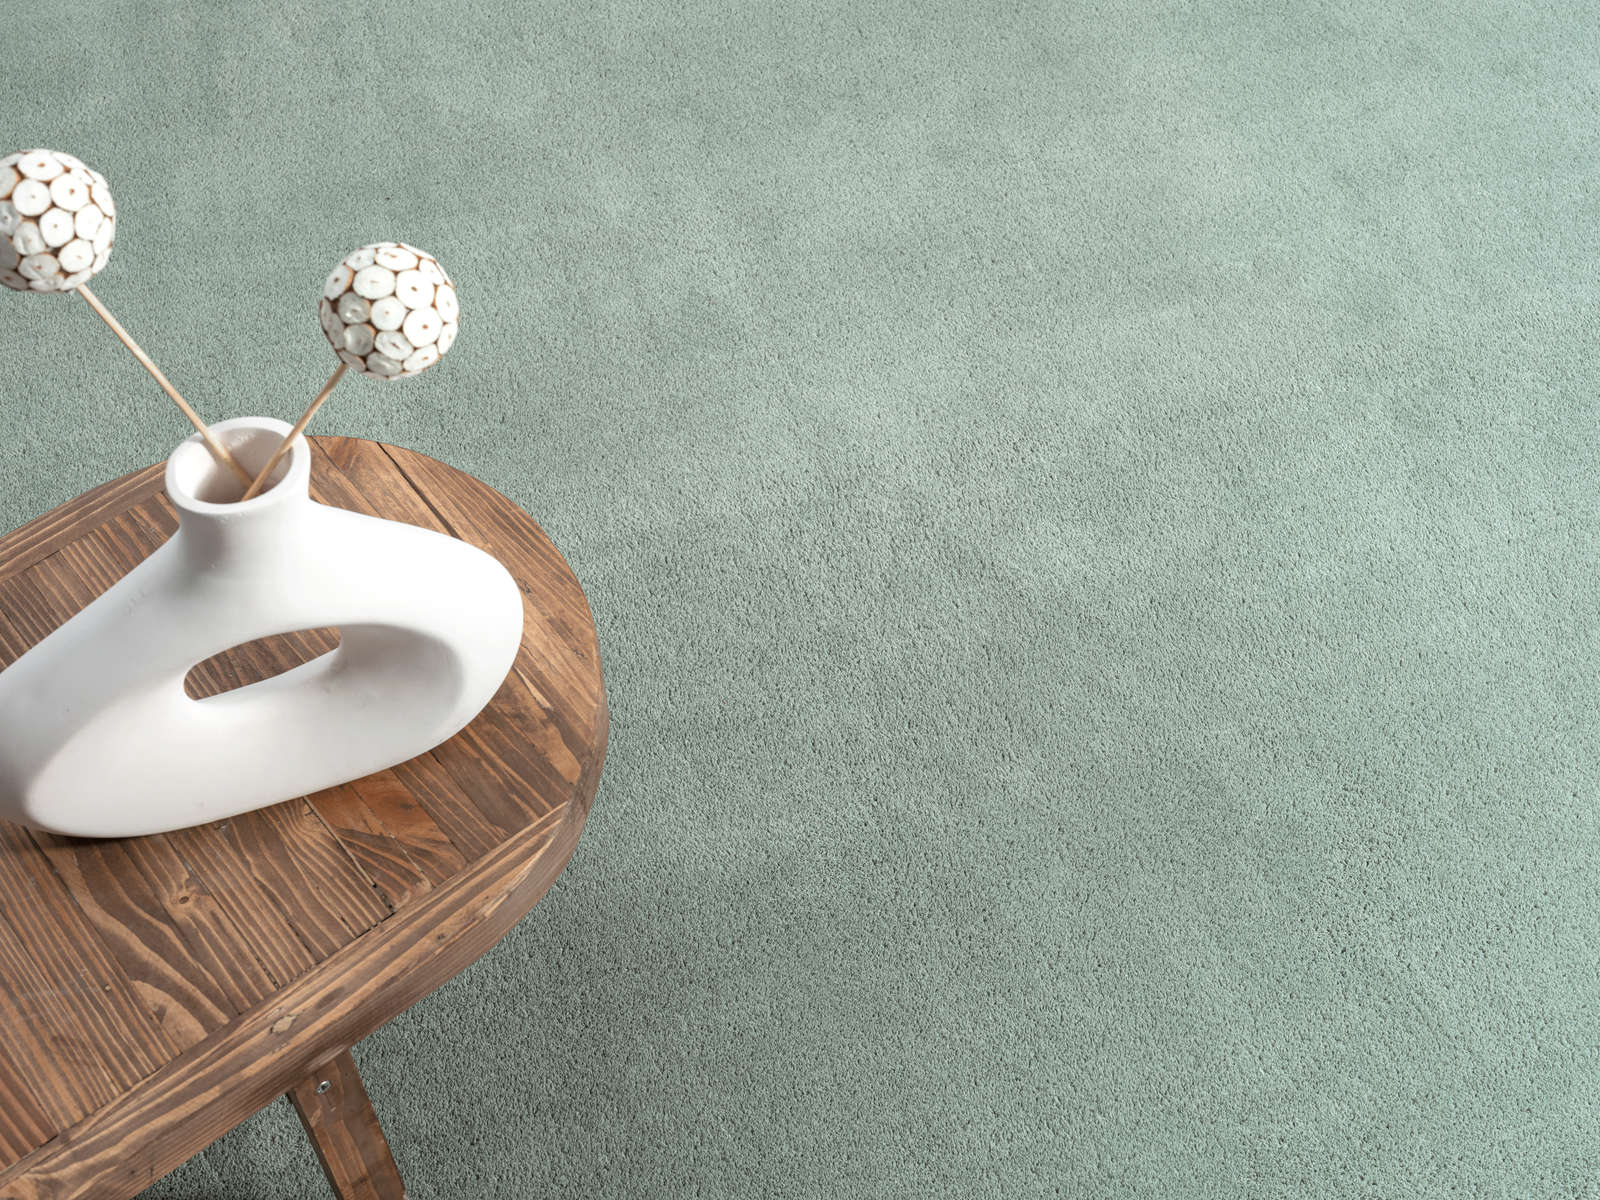             Soft pile carpet in green - 110 x 60 cm
        